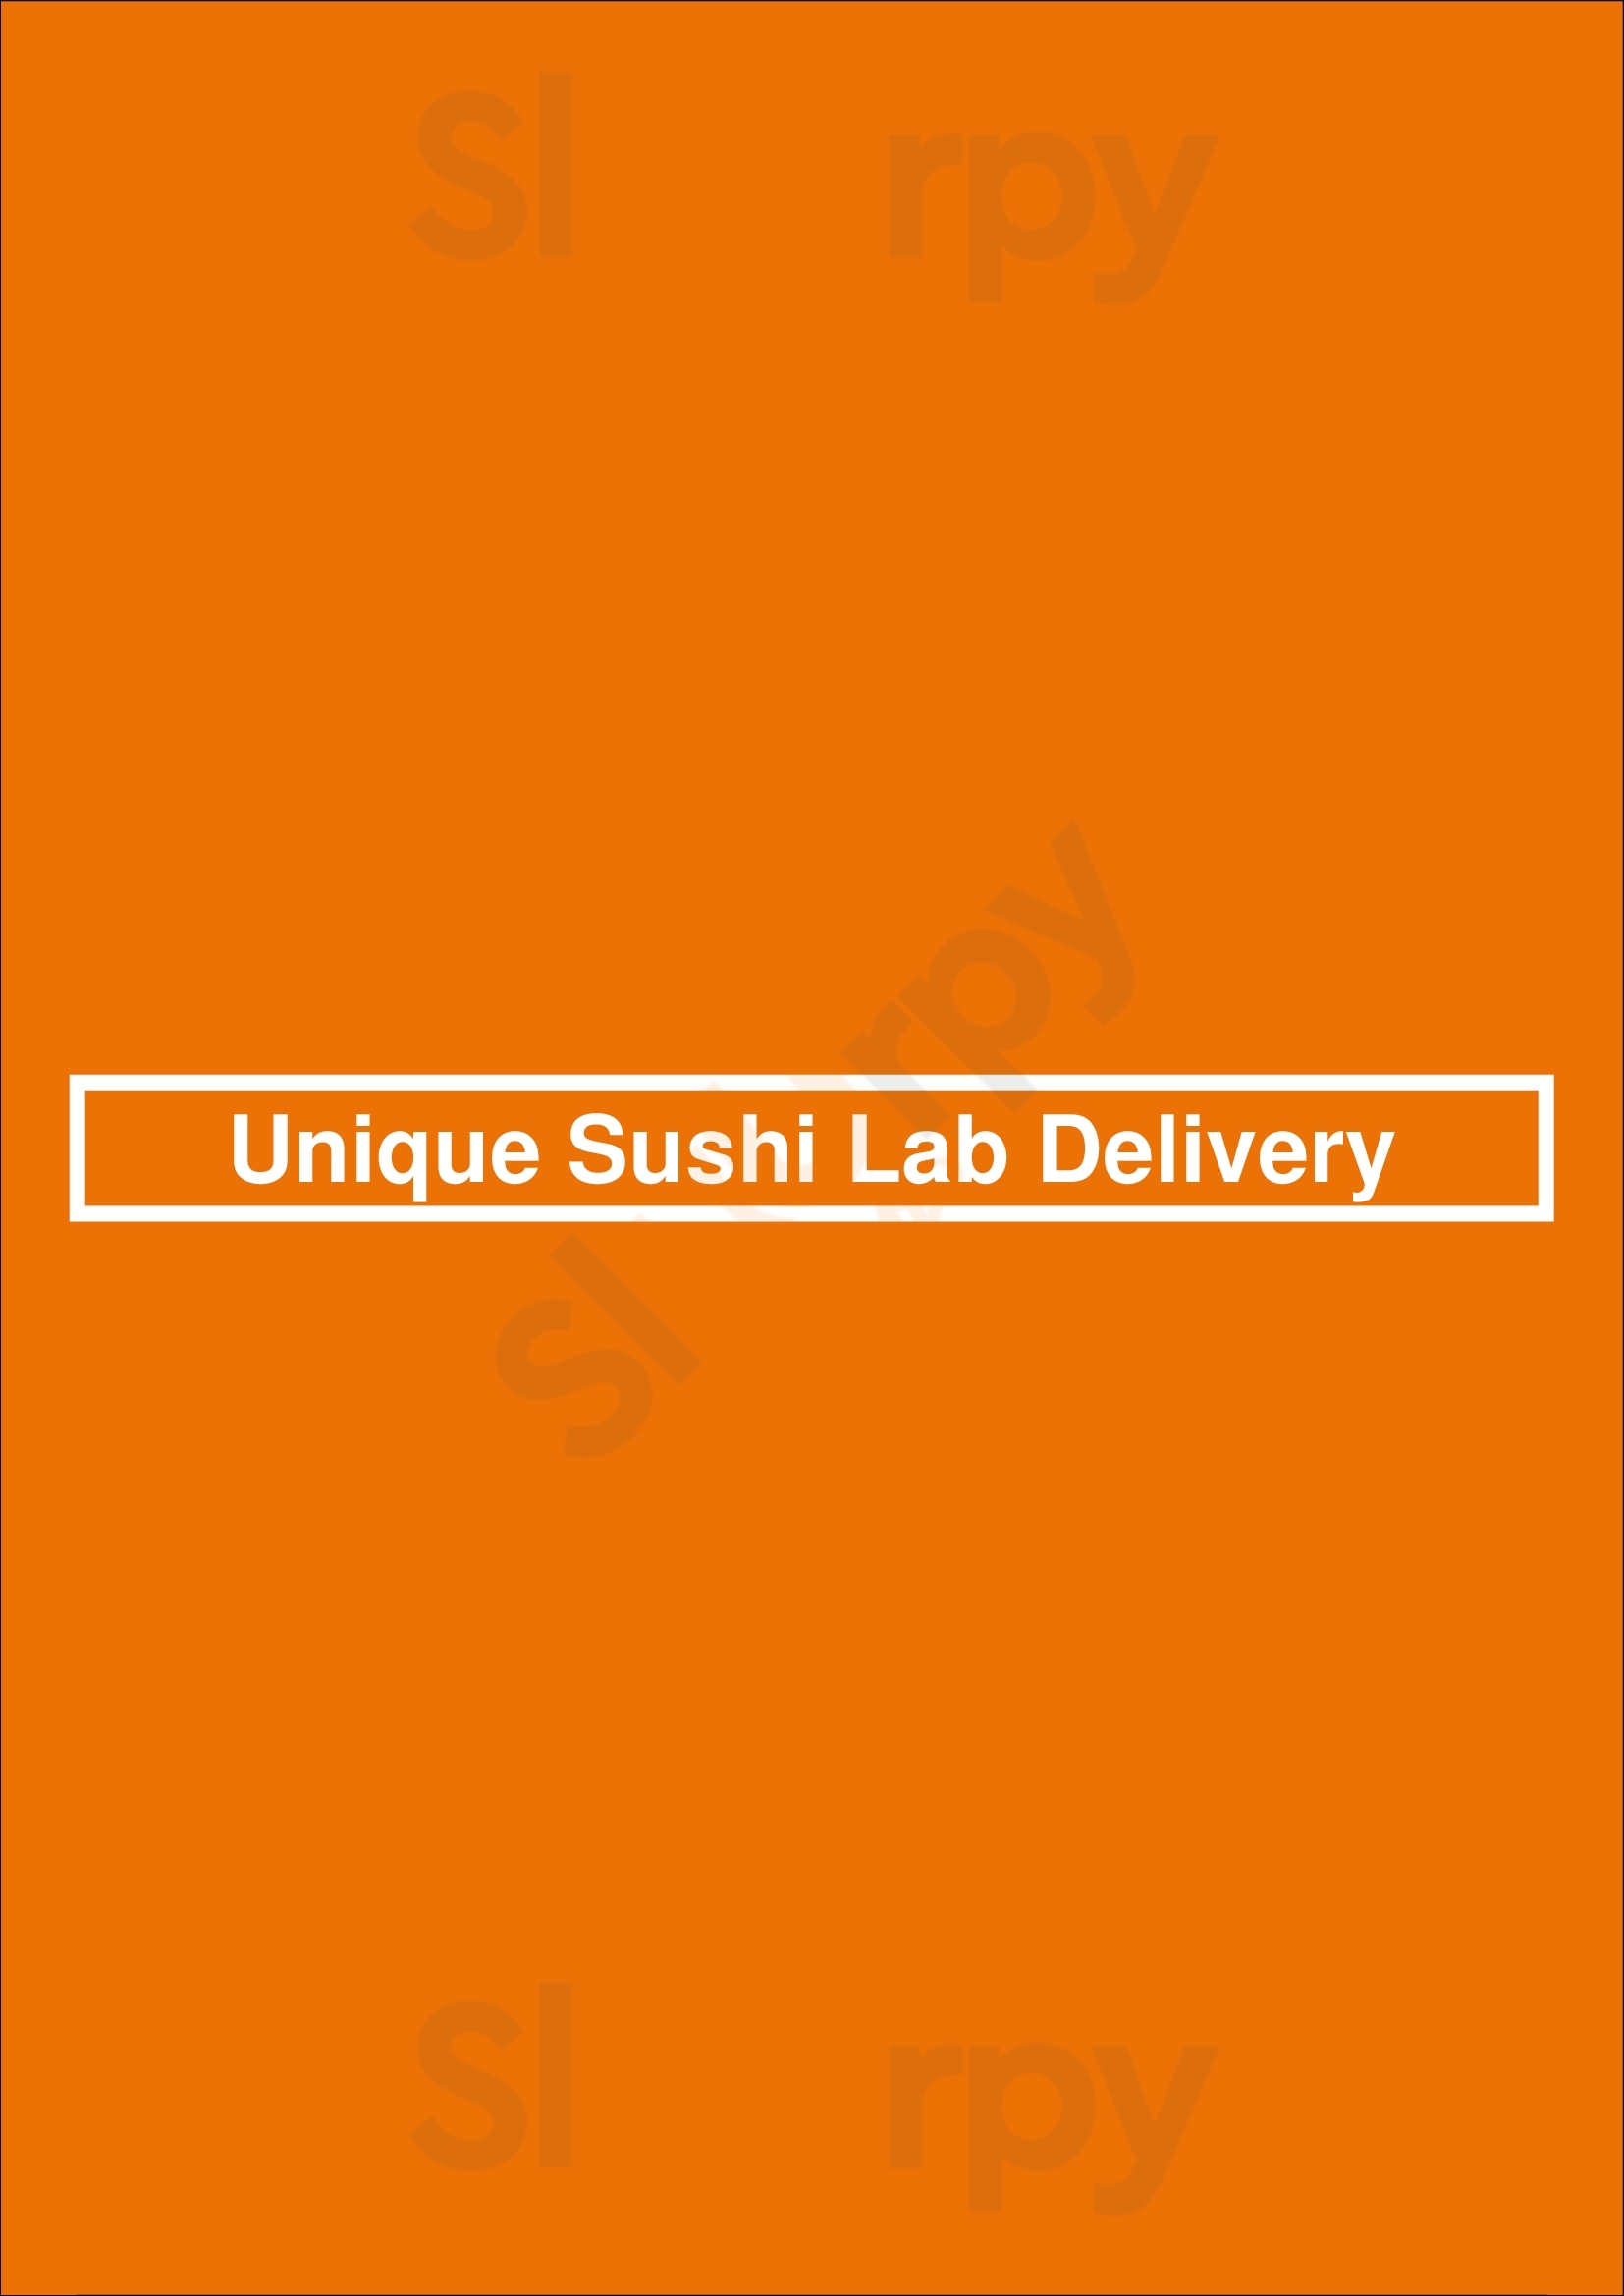 Unique Sushi Lab Delivery Lisboa Menu - 1